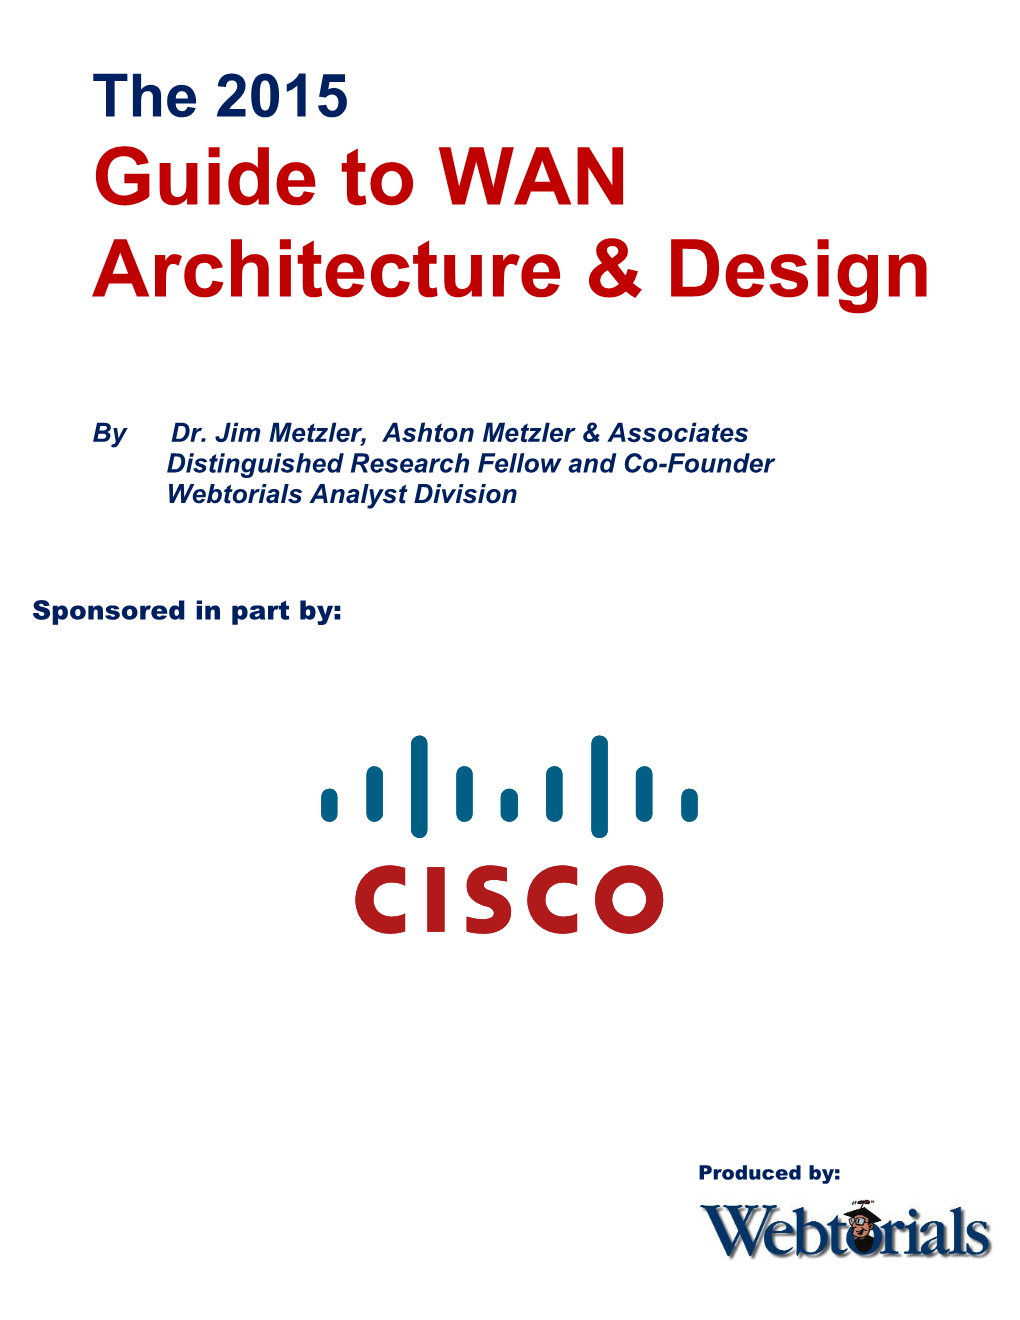 Guide to WAN Architecture & Design